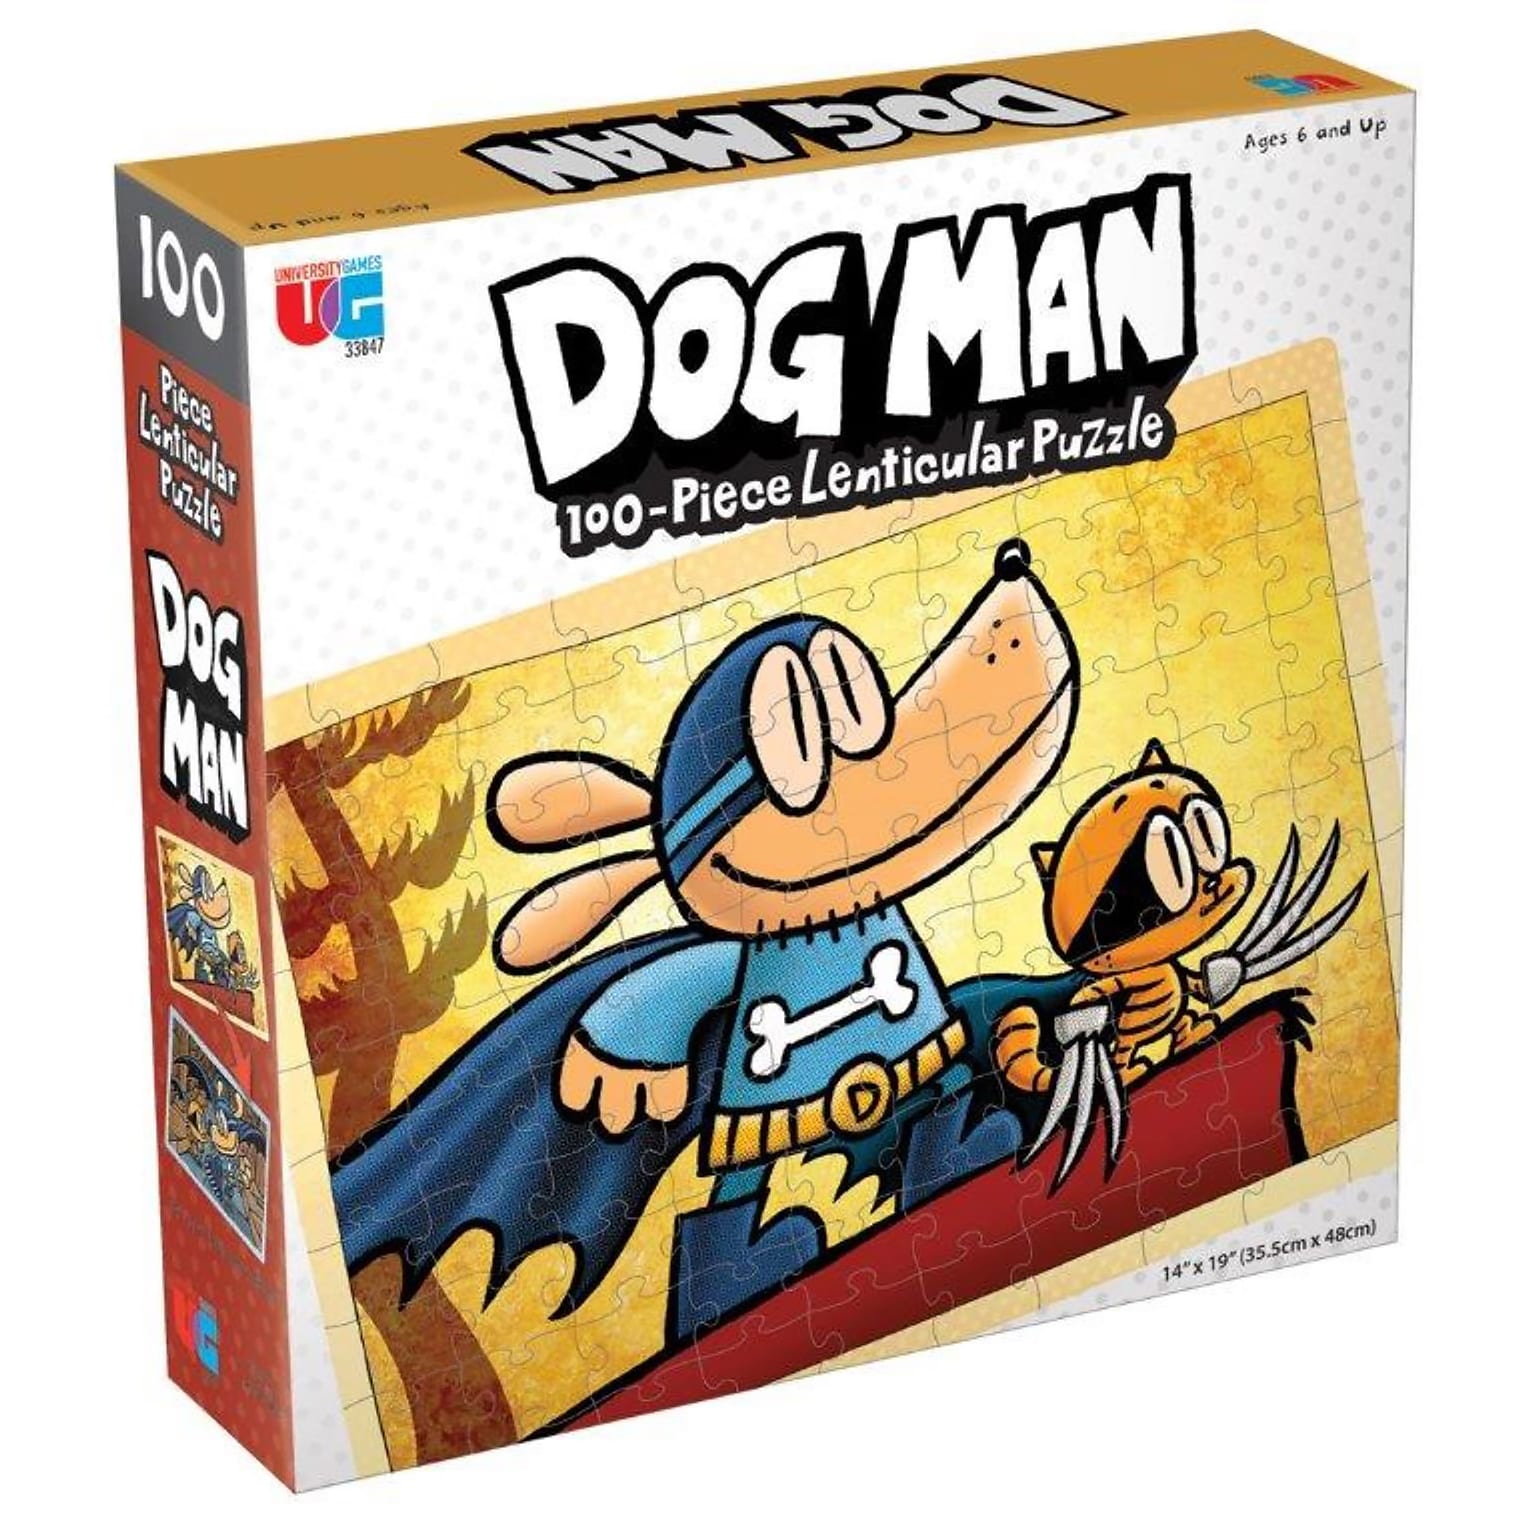 University Games Dog Man Adventures Puzzle, 100-Piece Jigsaw (UG-33847)